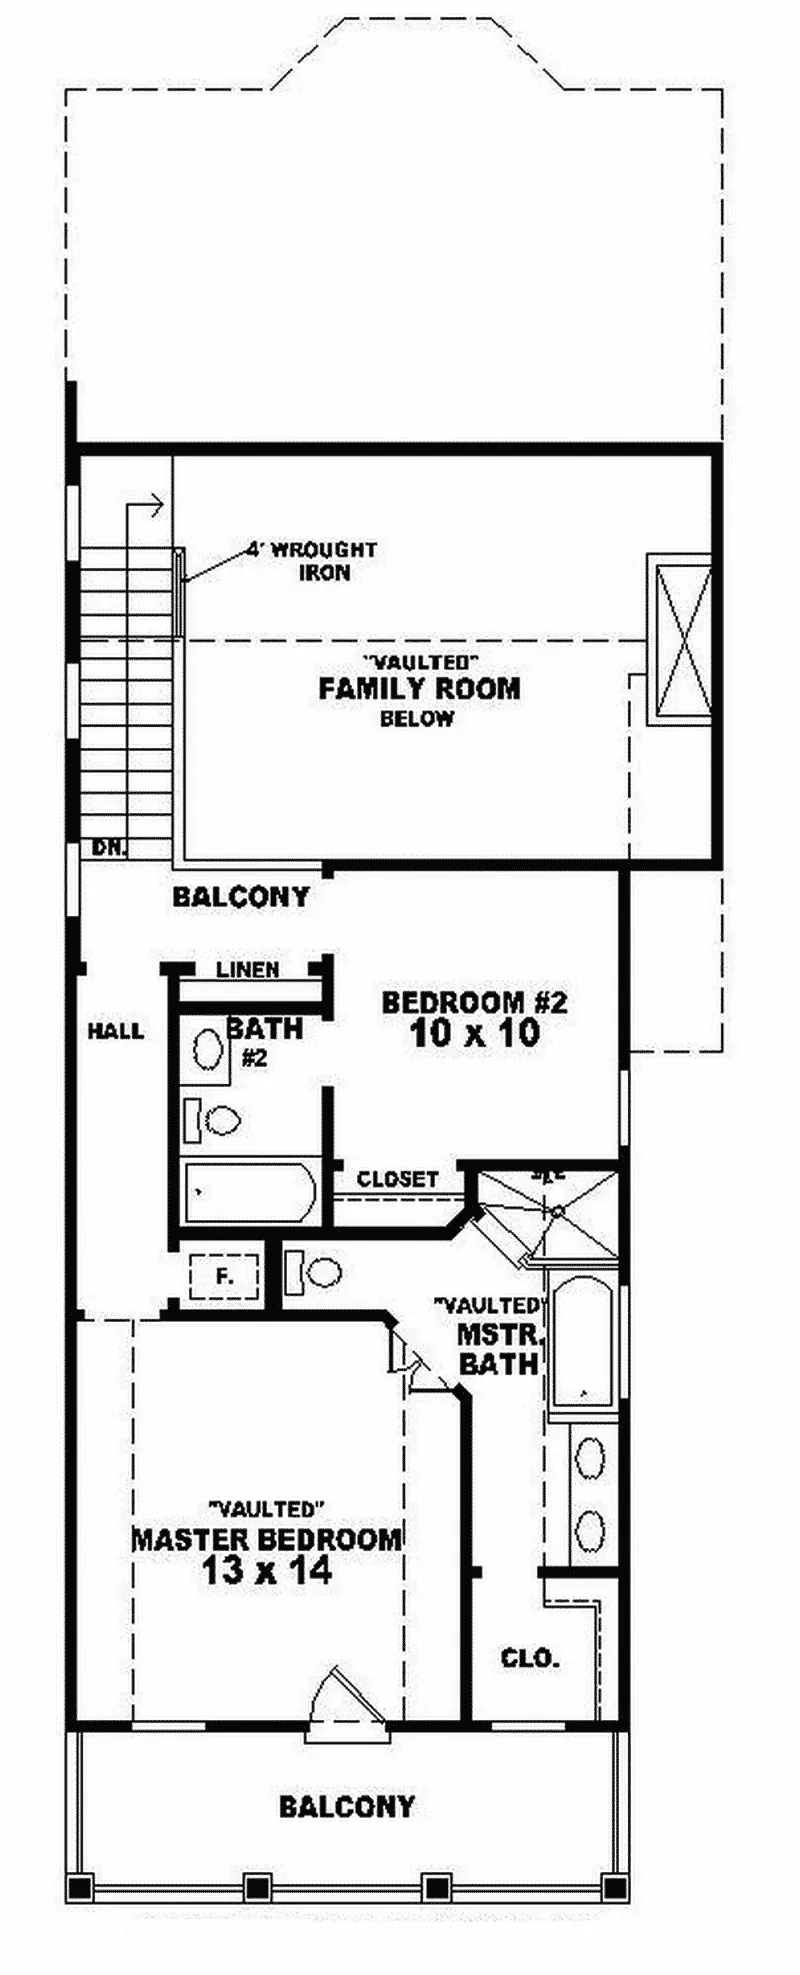 Beach & Coastal House Plan Second Floor - Letitia Bay Coastal Home 087D-0070 - Shop House Plans and More